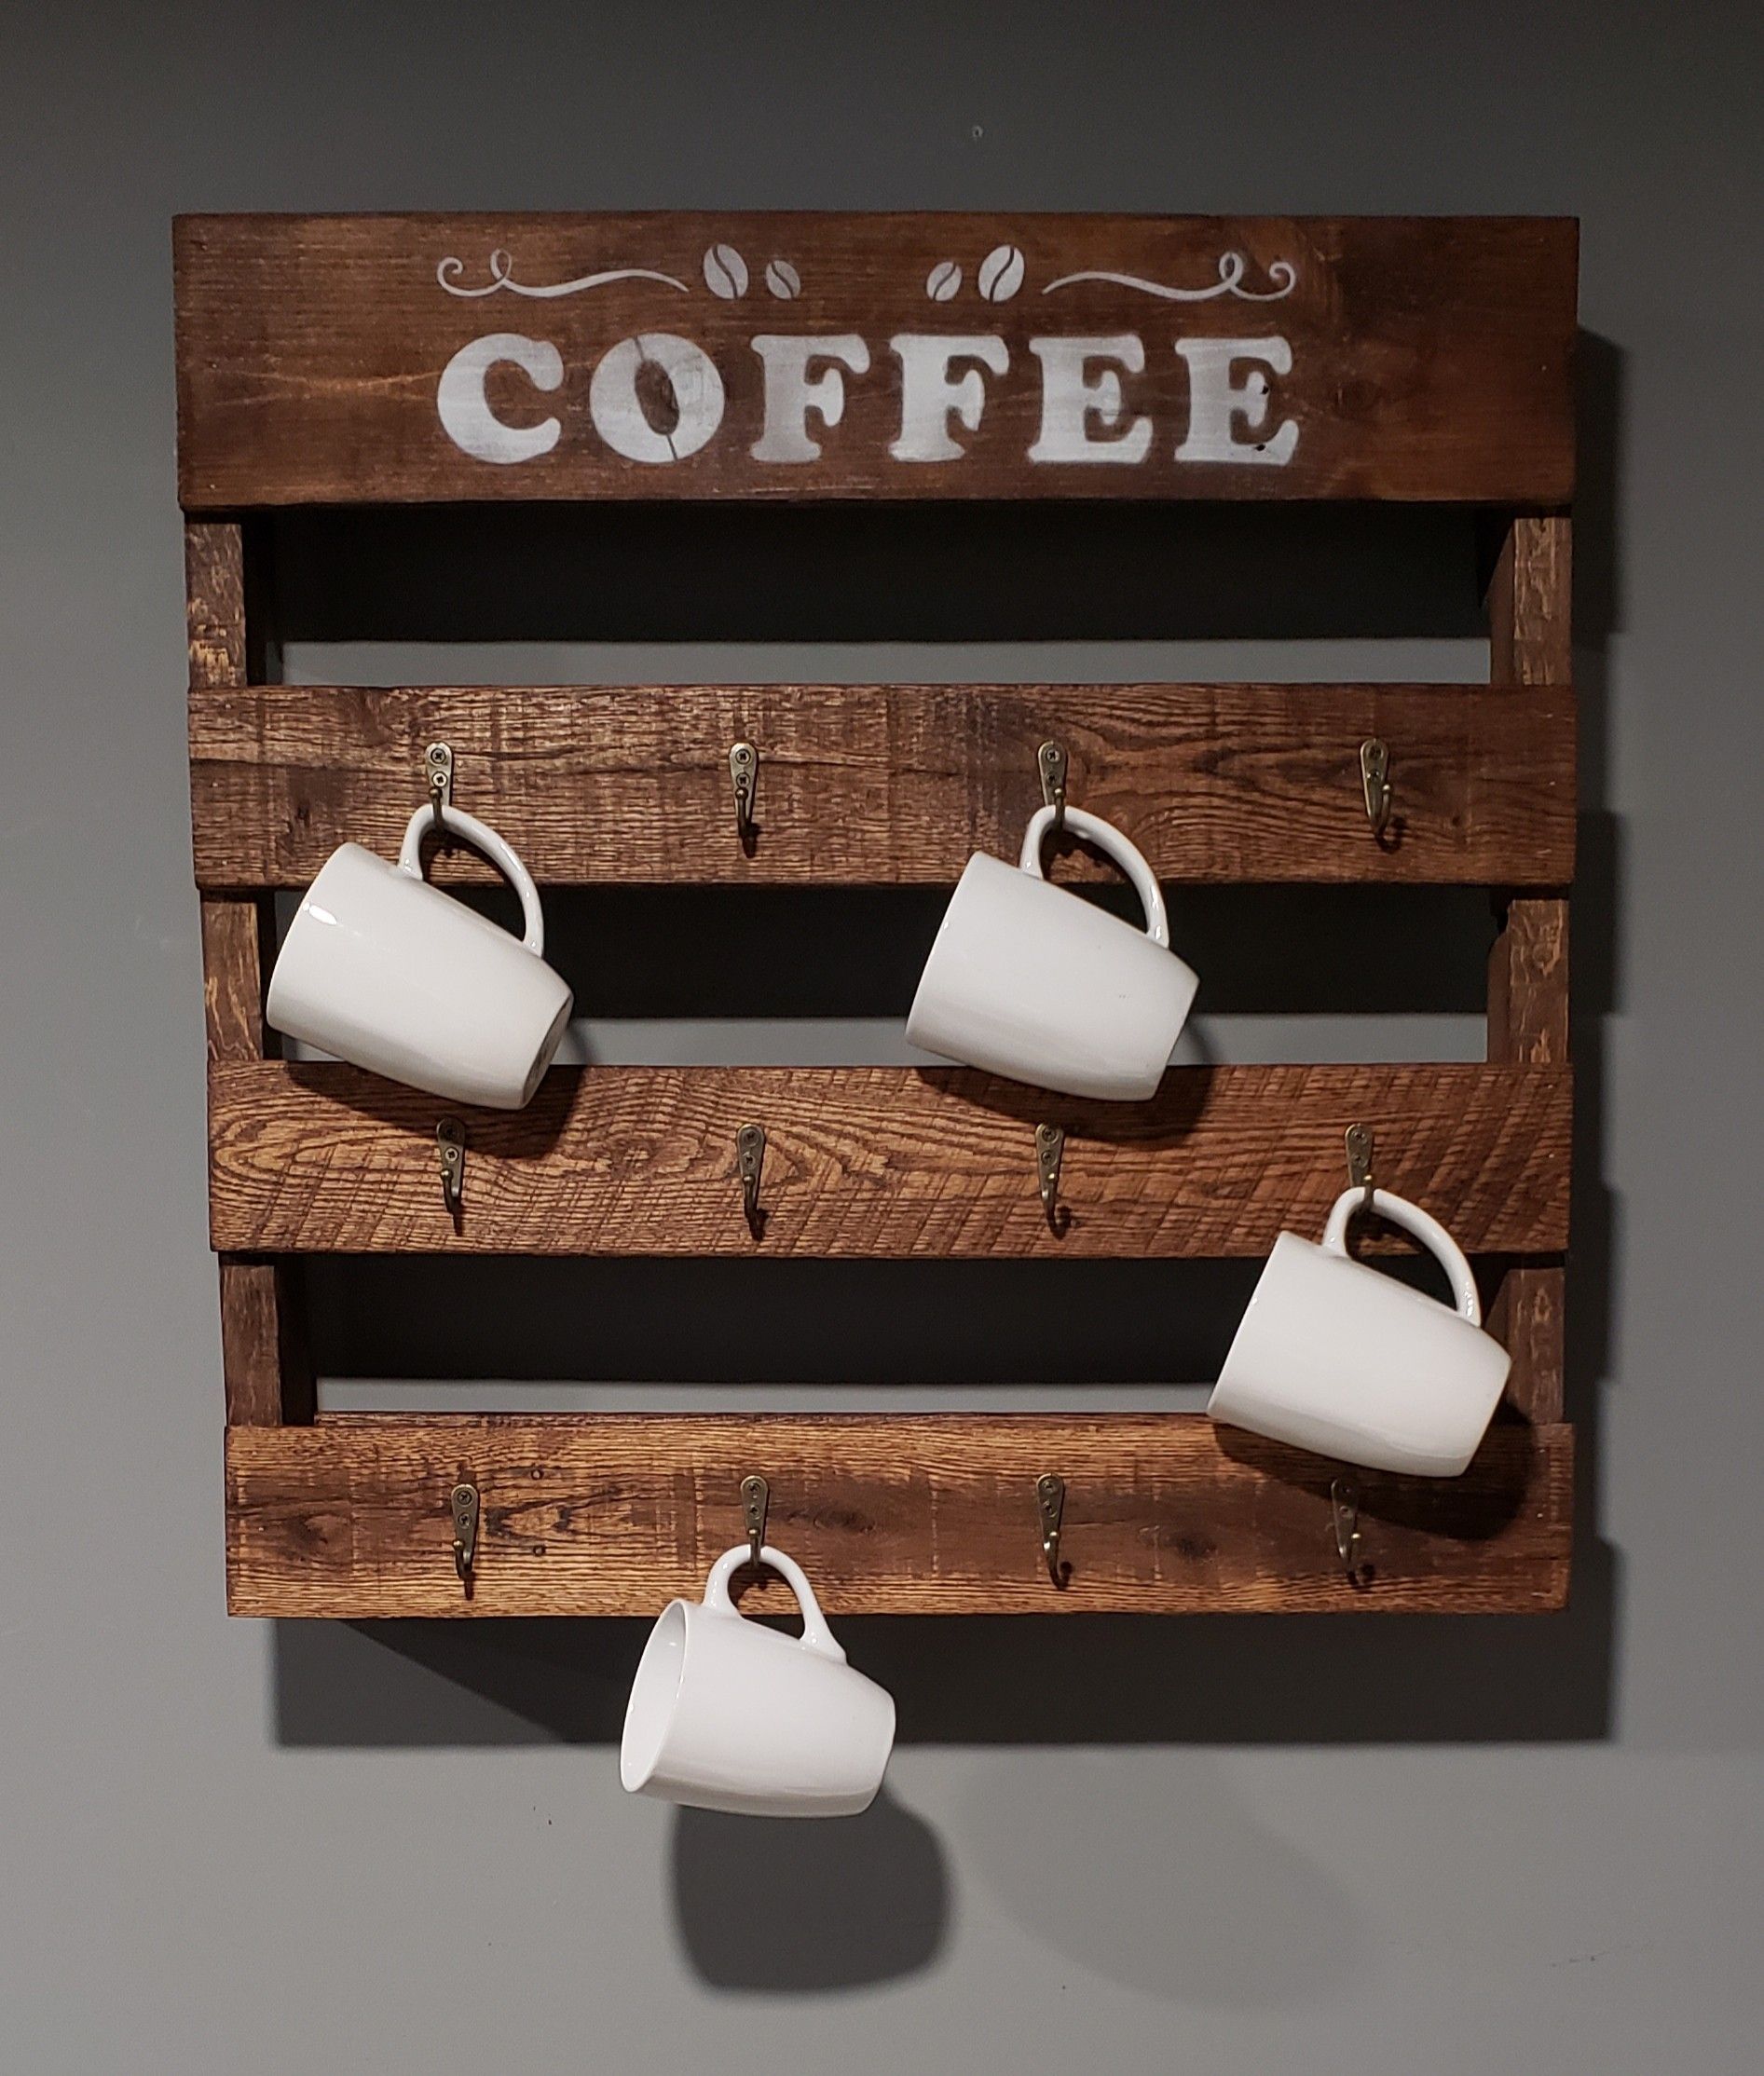 Coffee cup holders